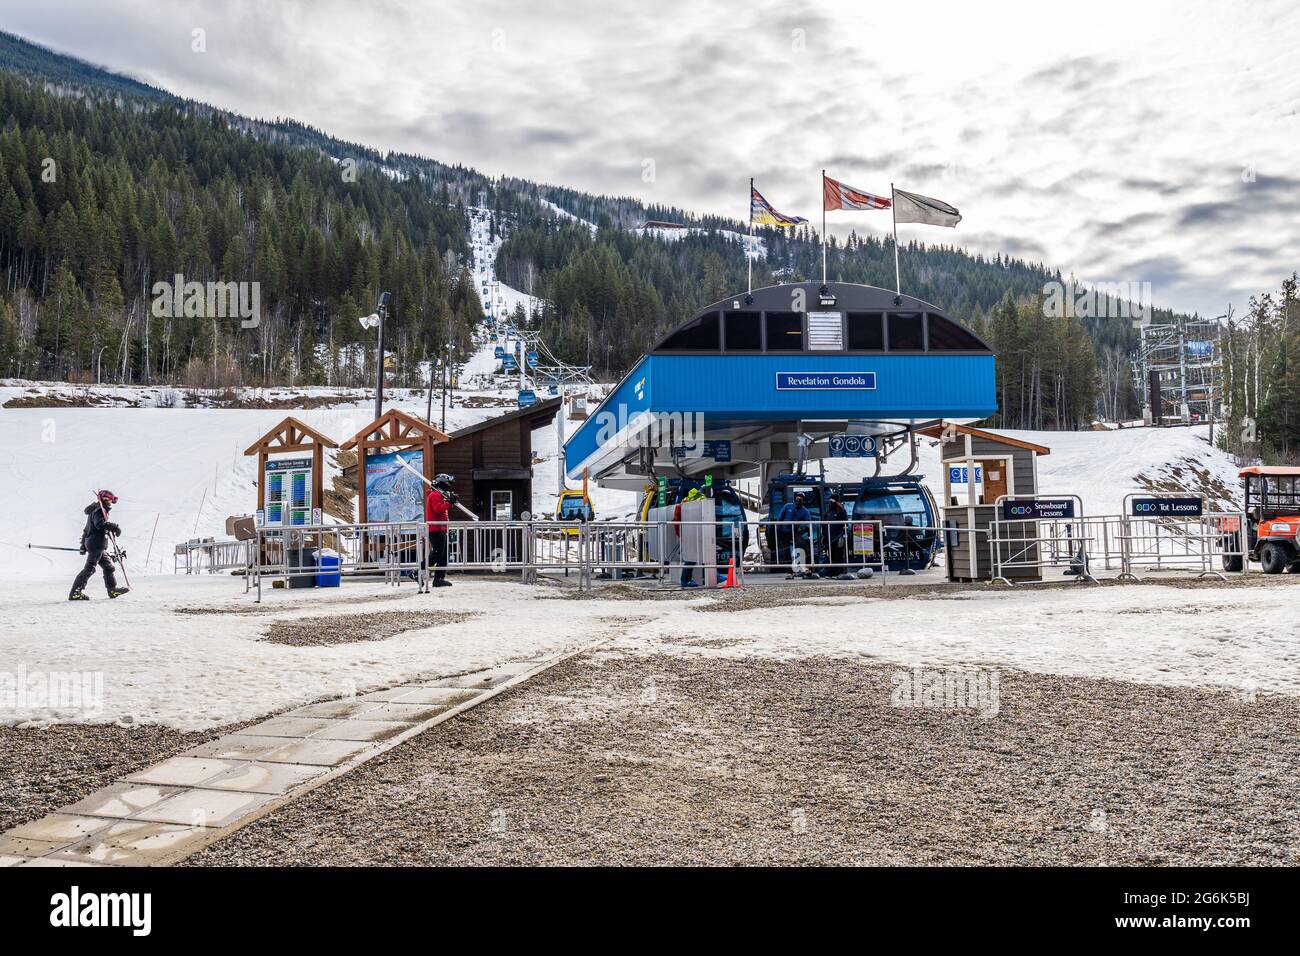 REVELSTOKE, CANADA - MARCH 15, 2021: revelation gondola at ski resort early spring Stock Photo